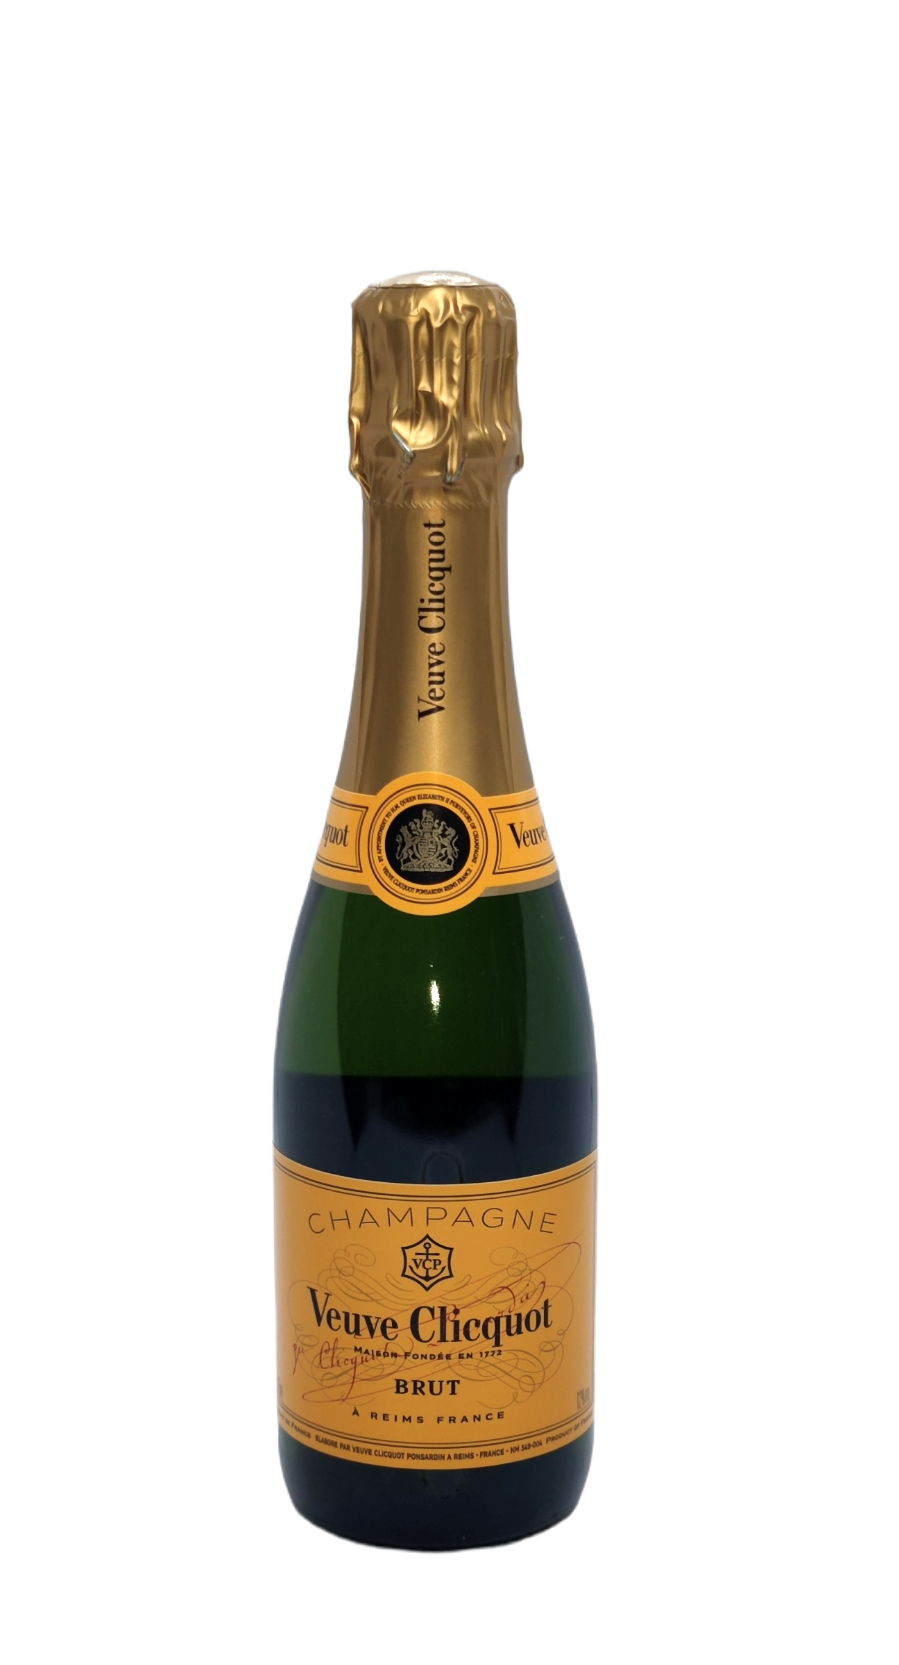 Veuve Cliquot Brut Champagner 0,375 l